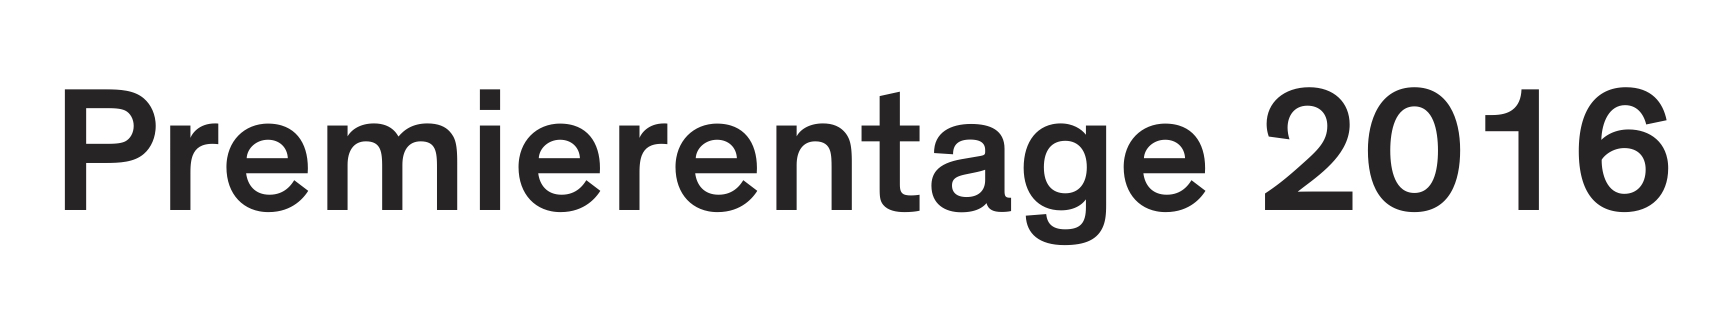 premierentage-logo-2016